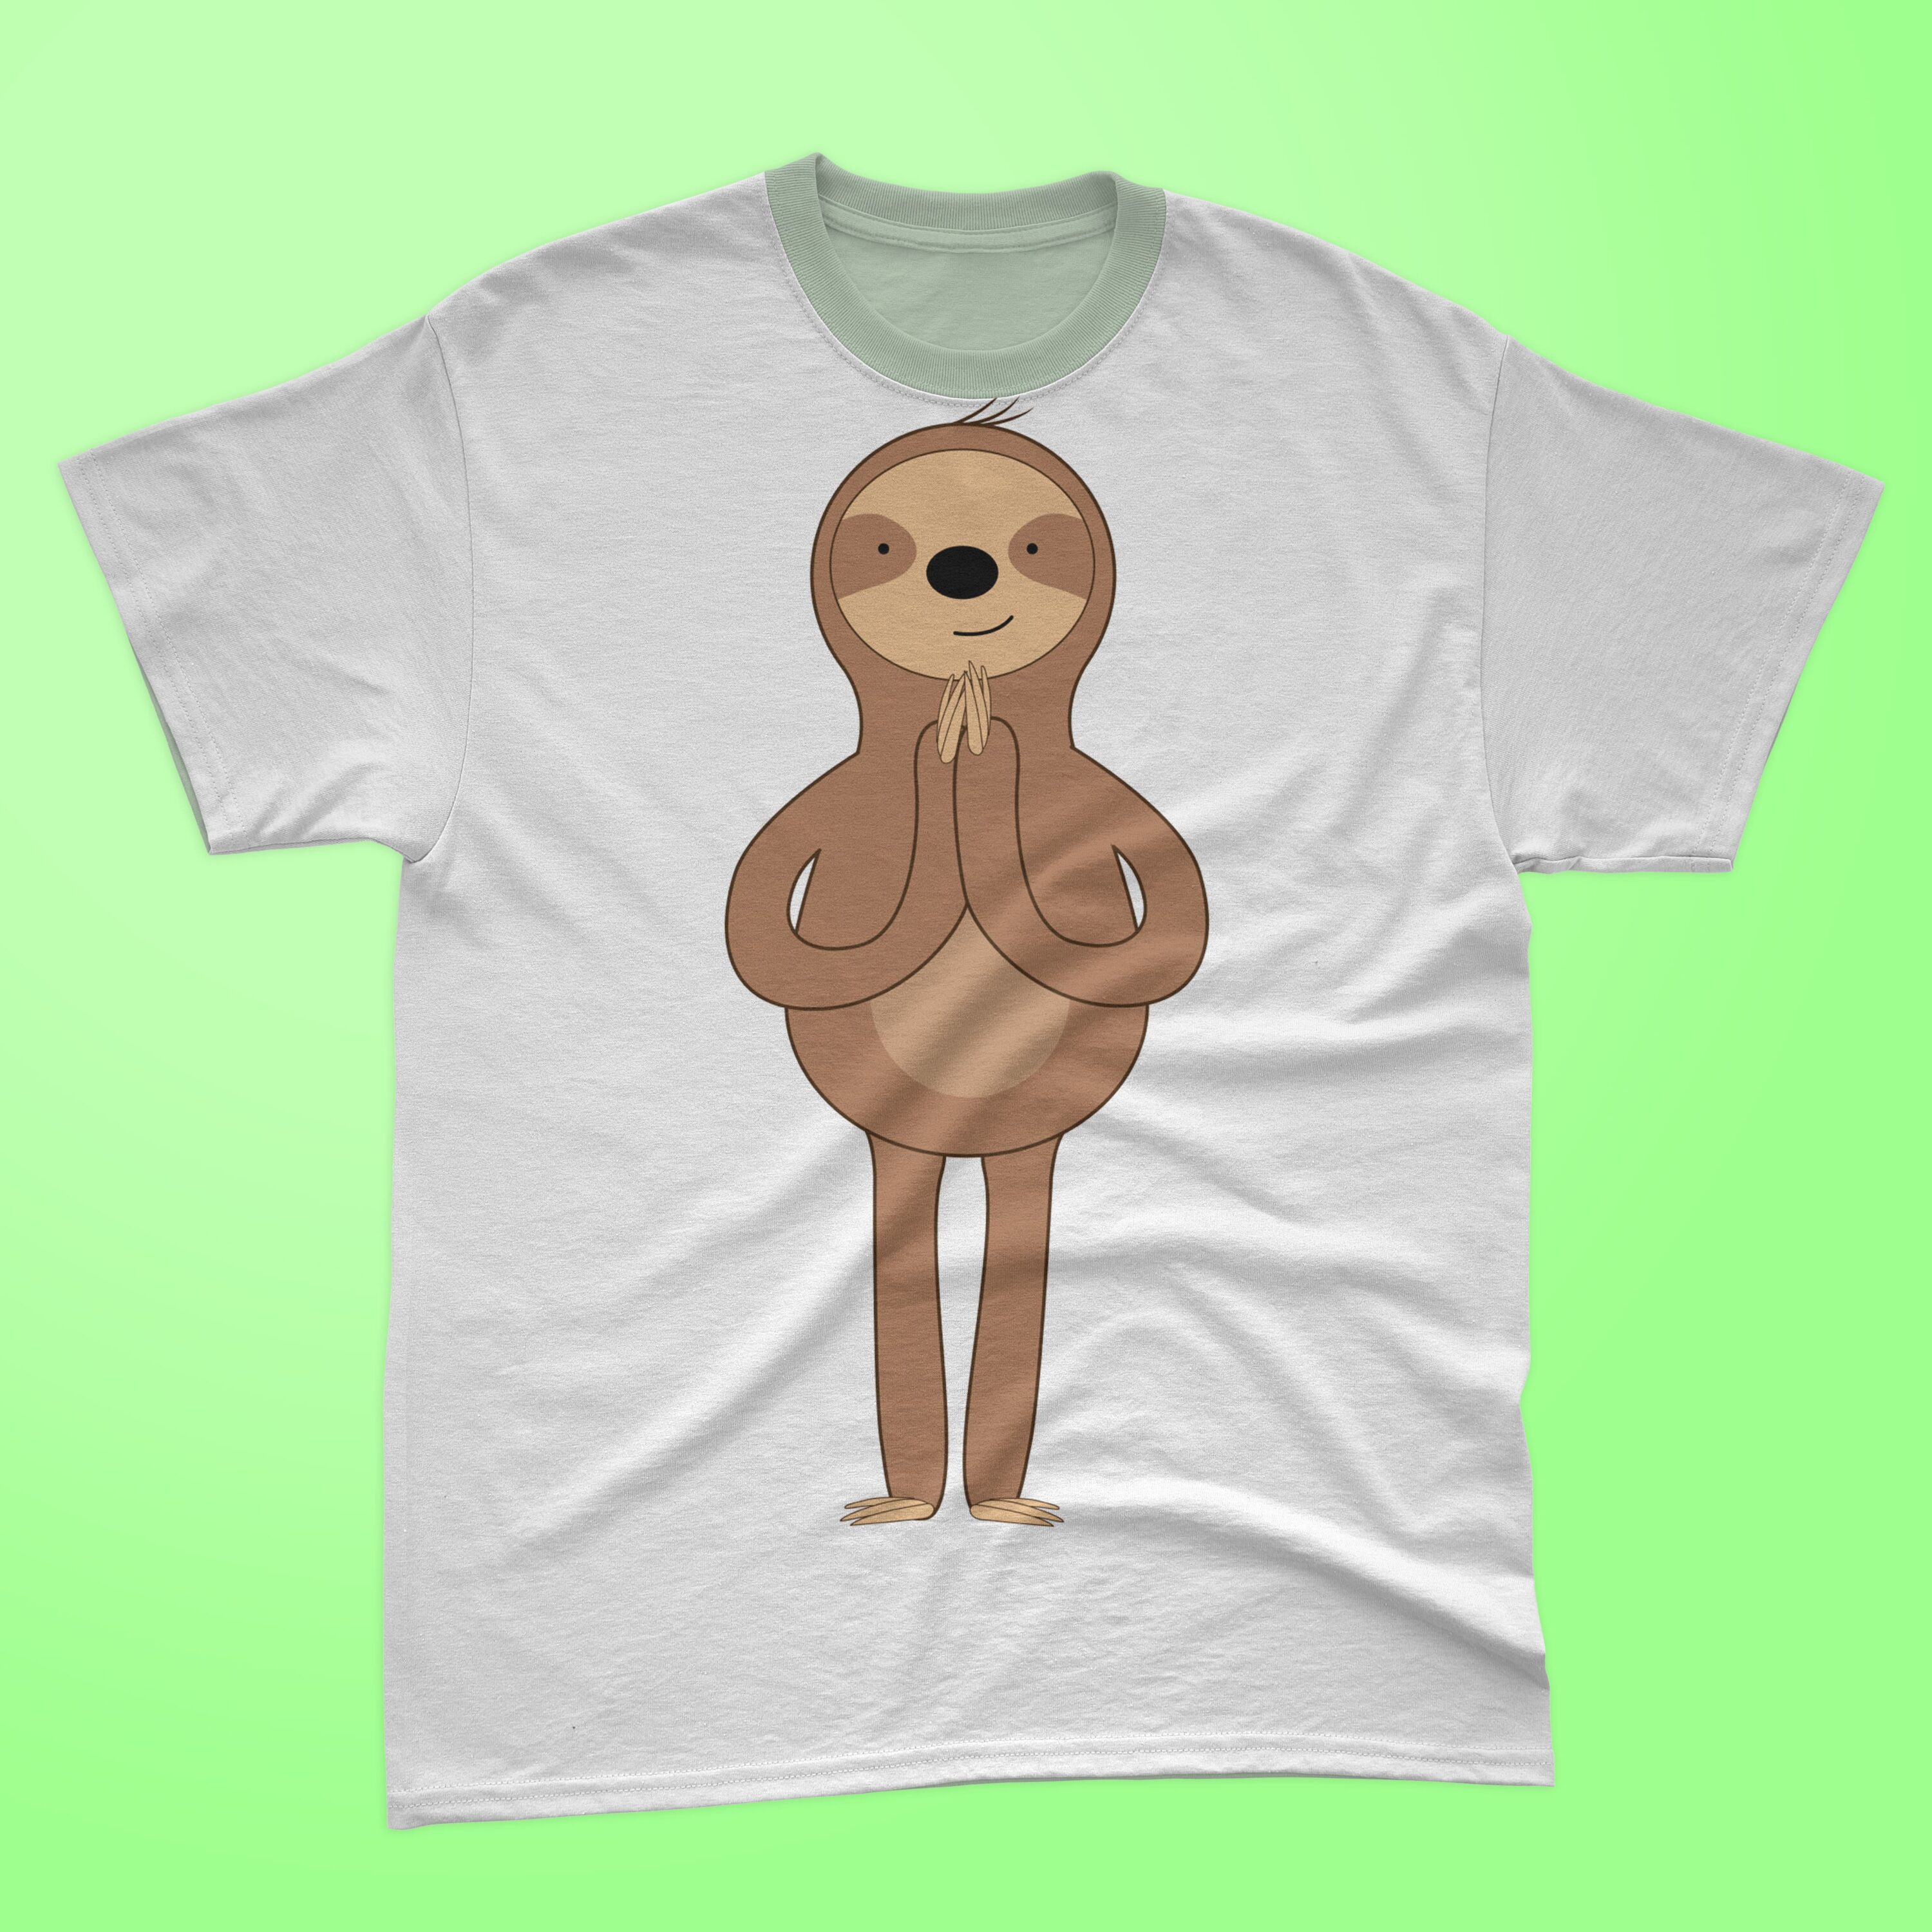 Image of white t-shirt with wonderful yoga sloth print.